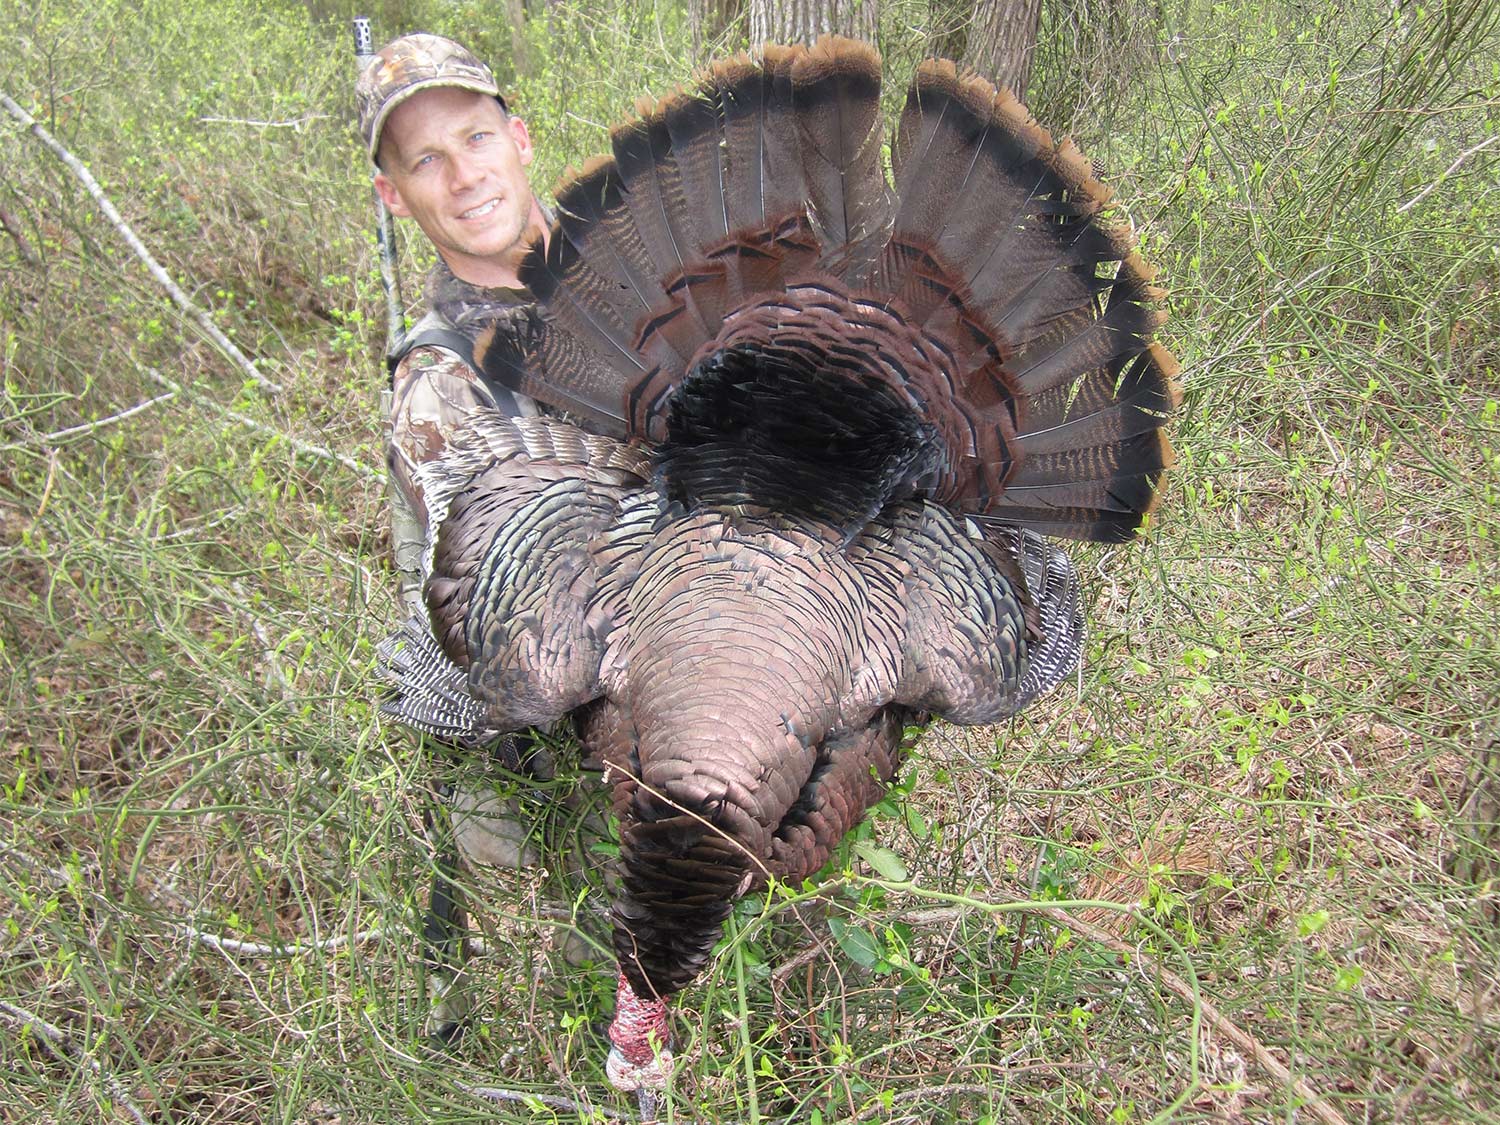 A hunter holds up a large turkey.